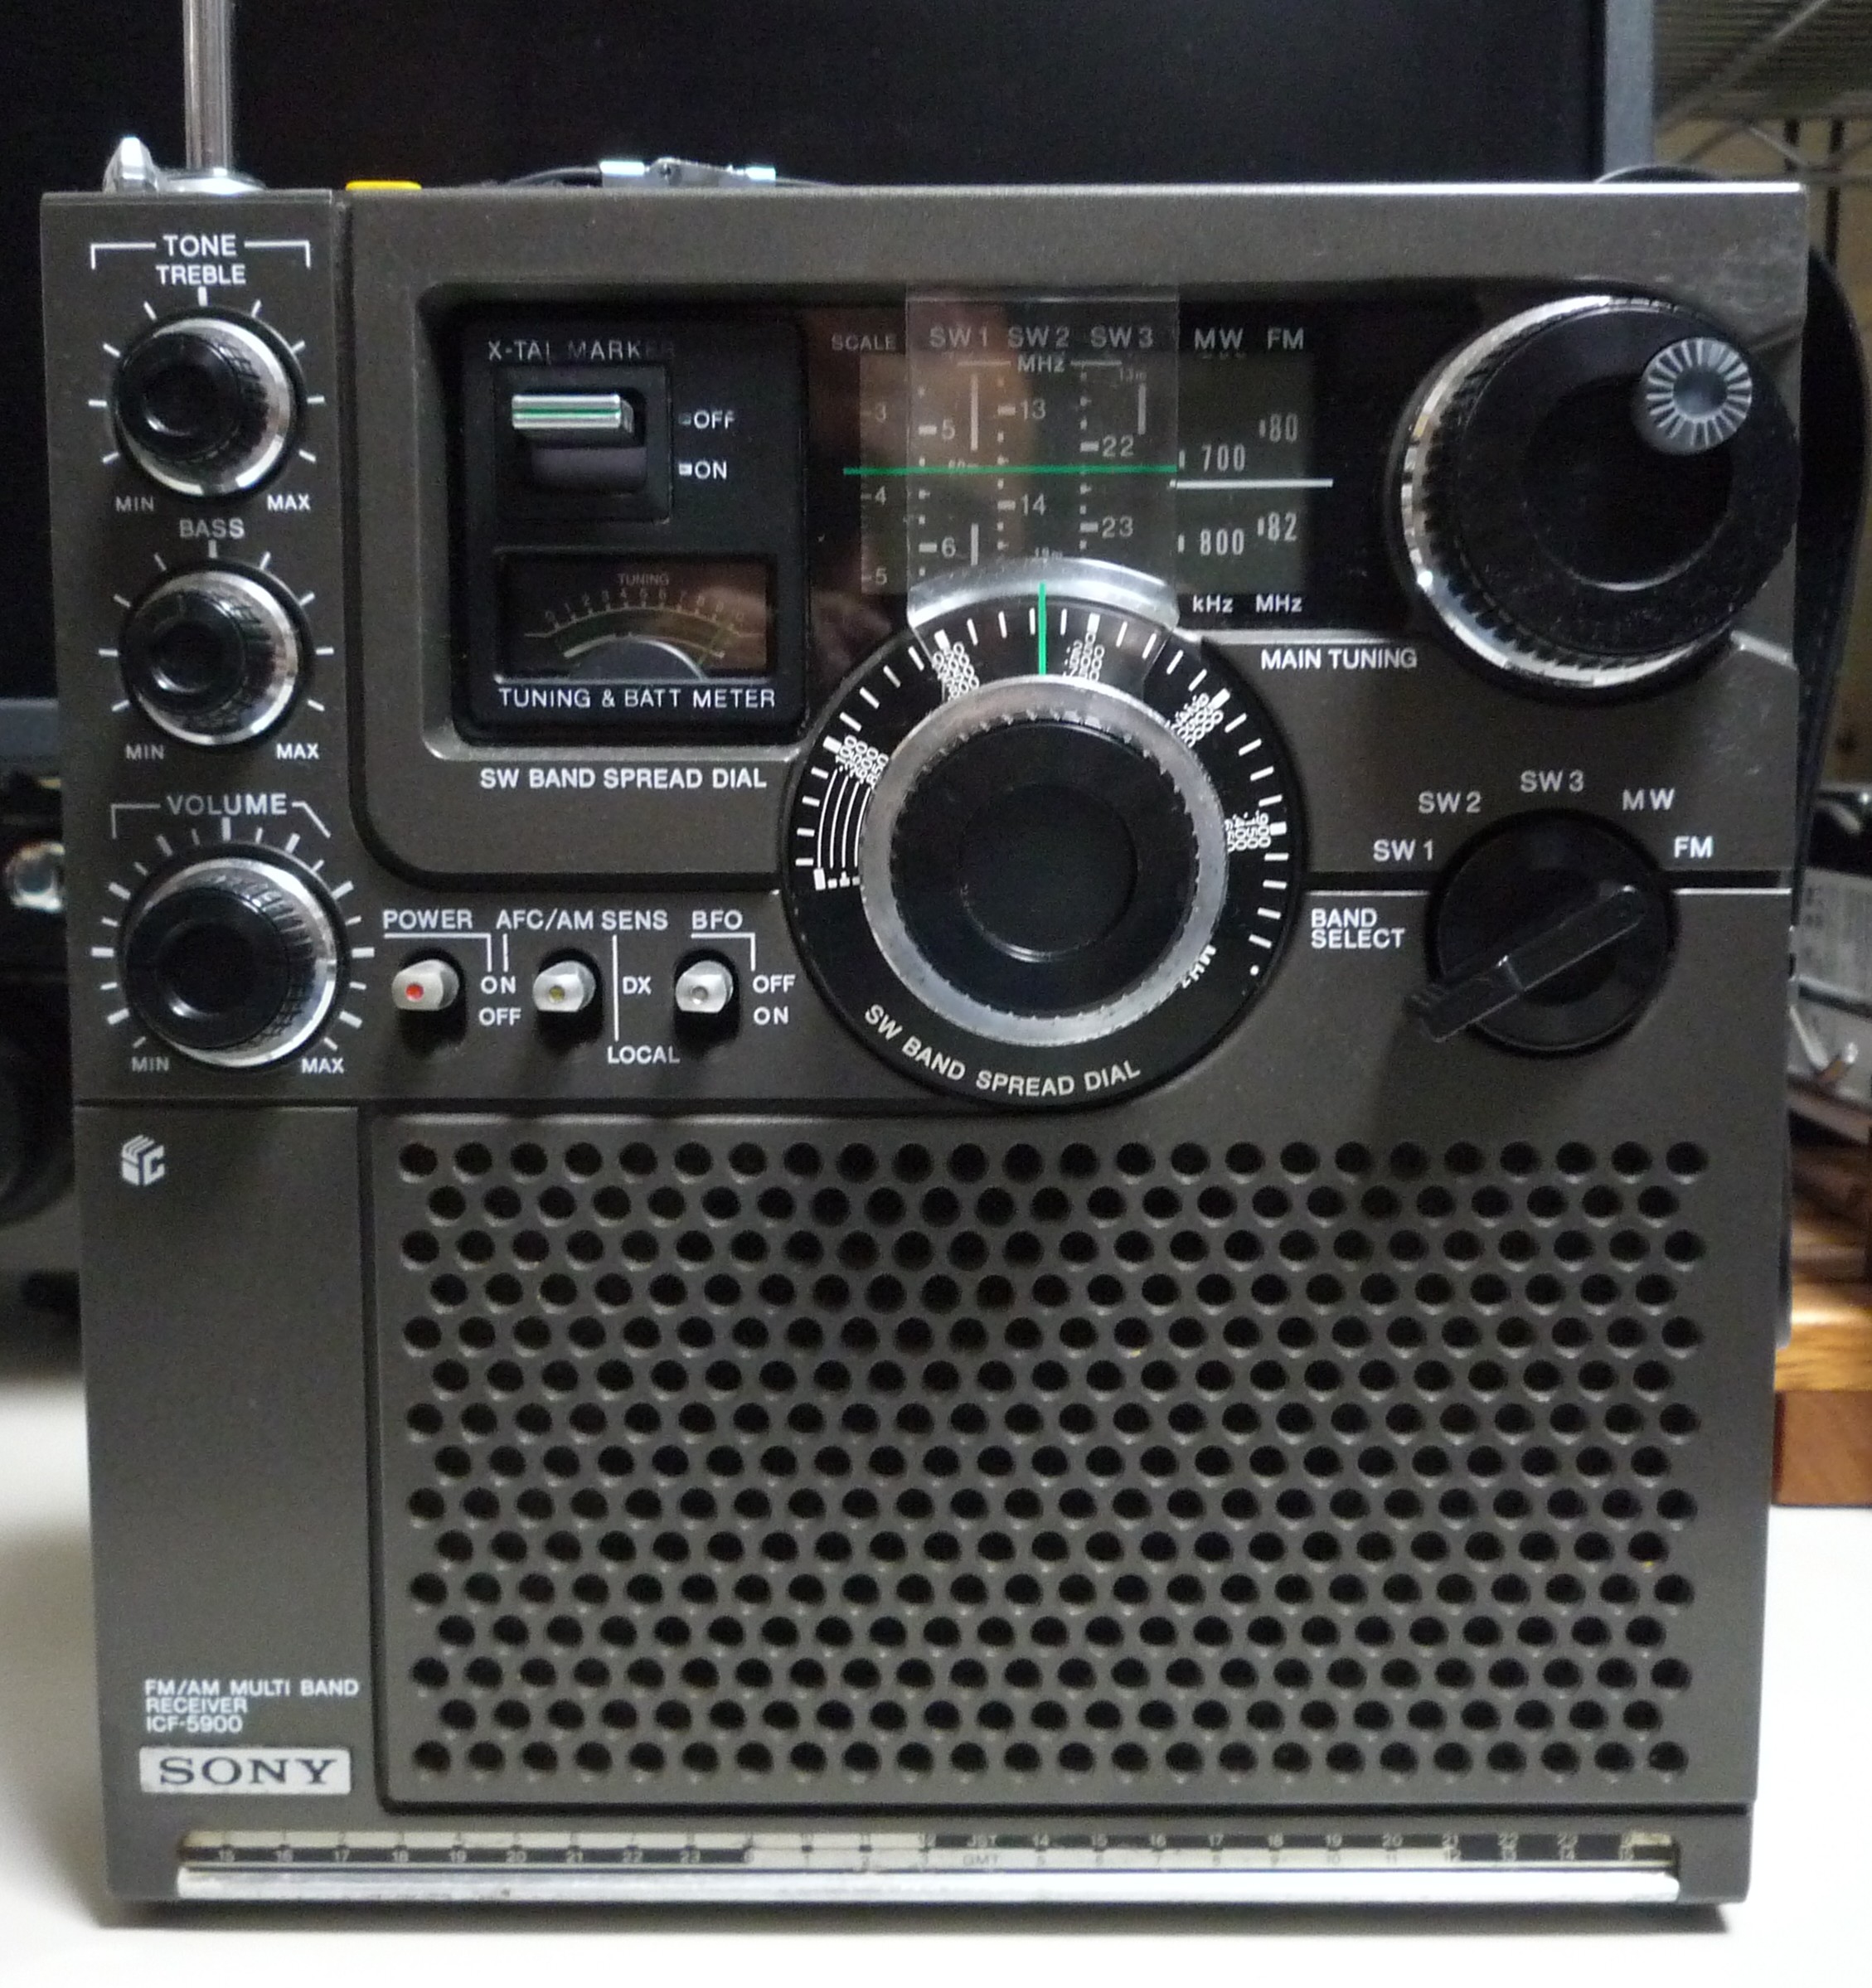 SONY ICF-SW35 FMラジオ - 楽器、器材